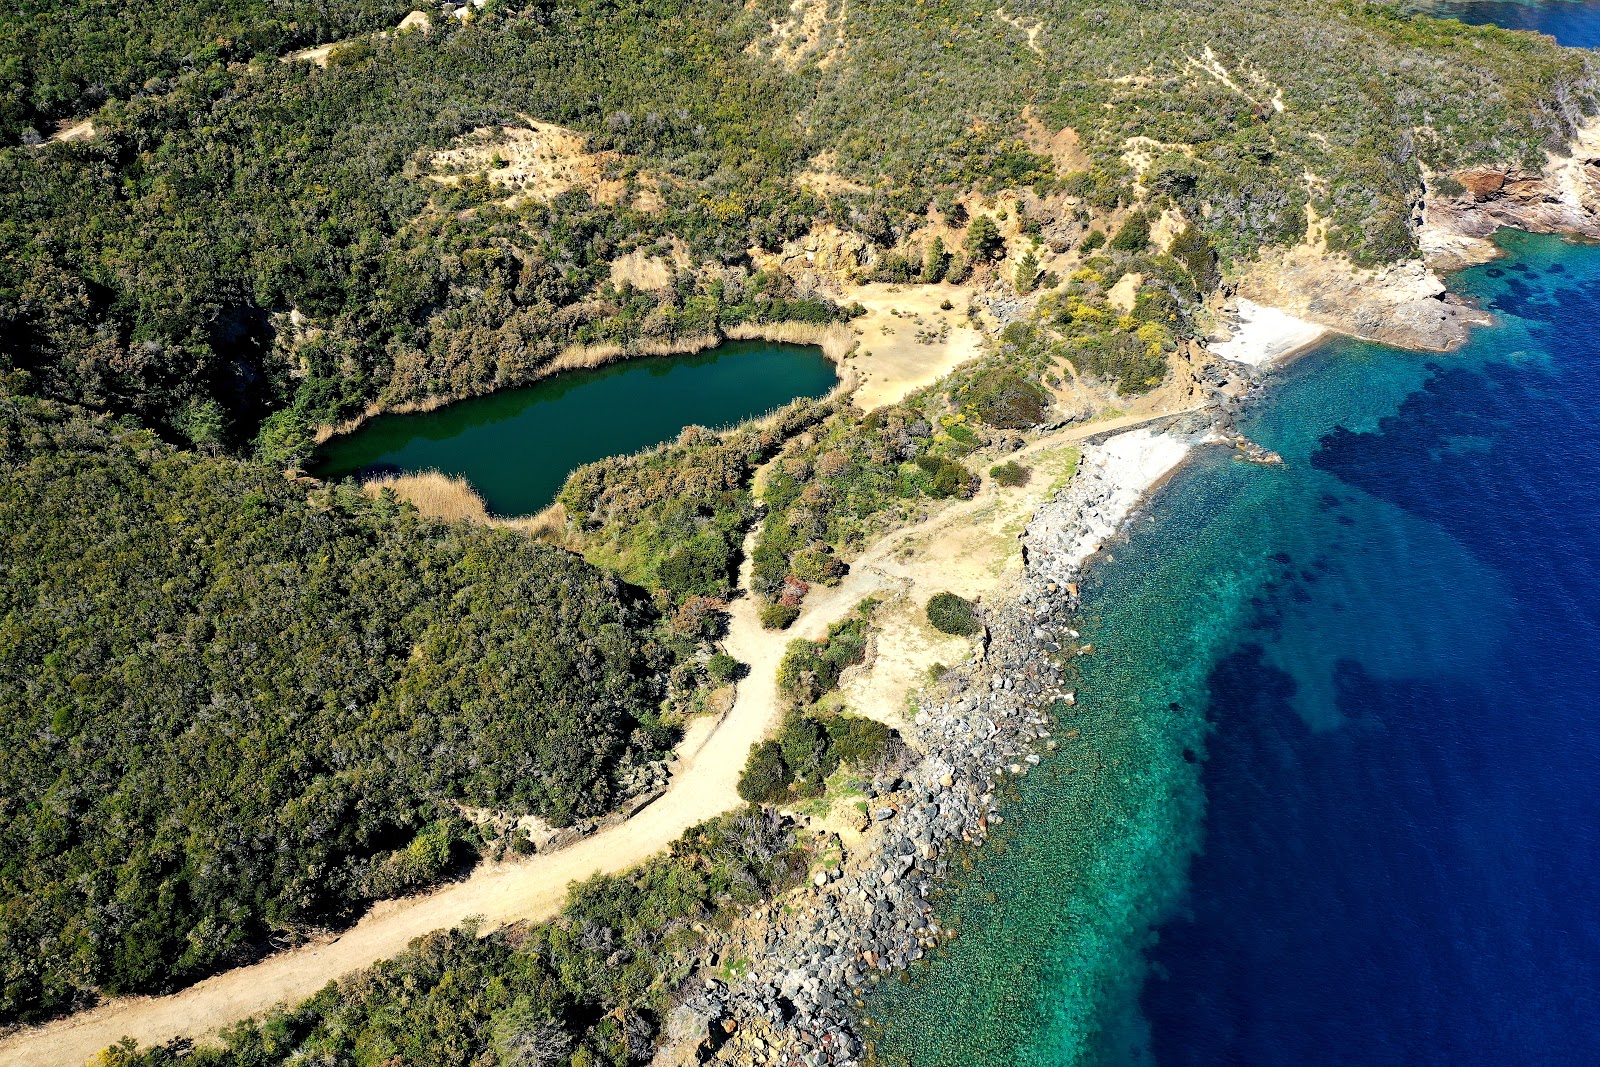 Photo de Spiaggia dei Sassi Neri situé dans une zone naturelle